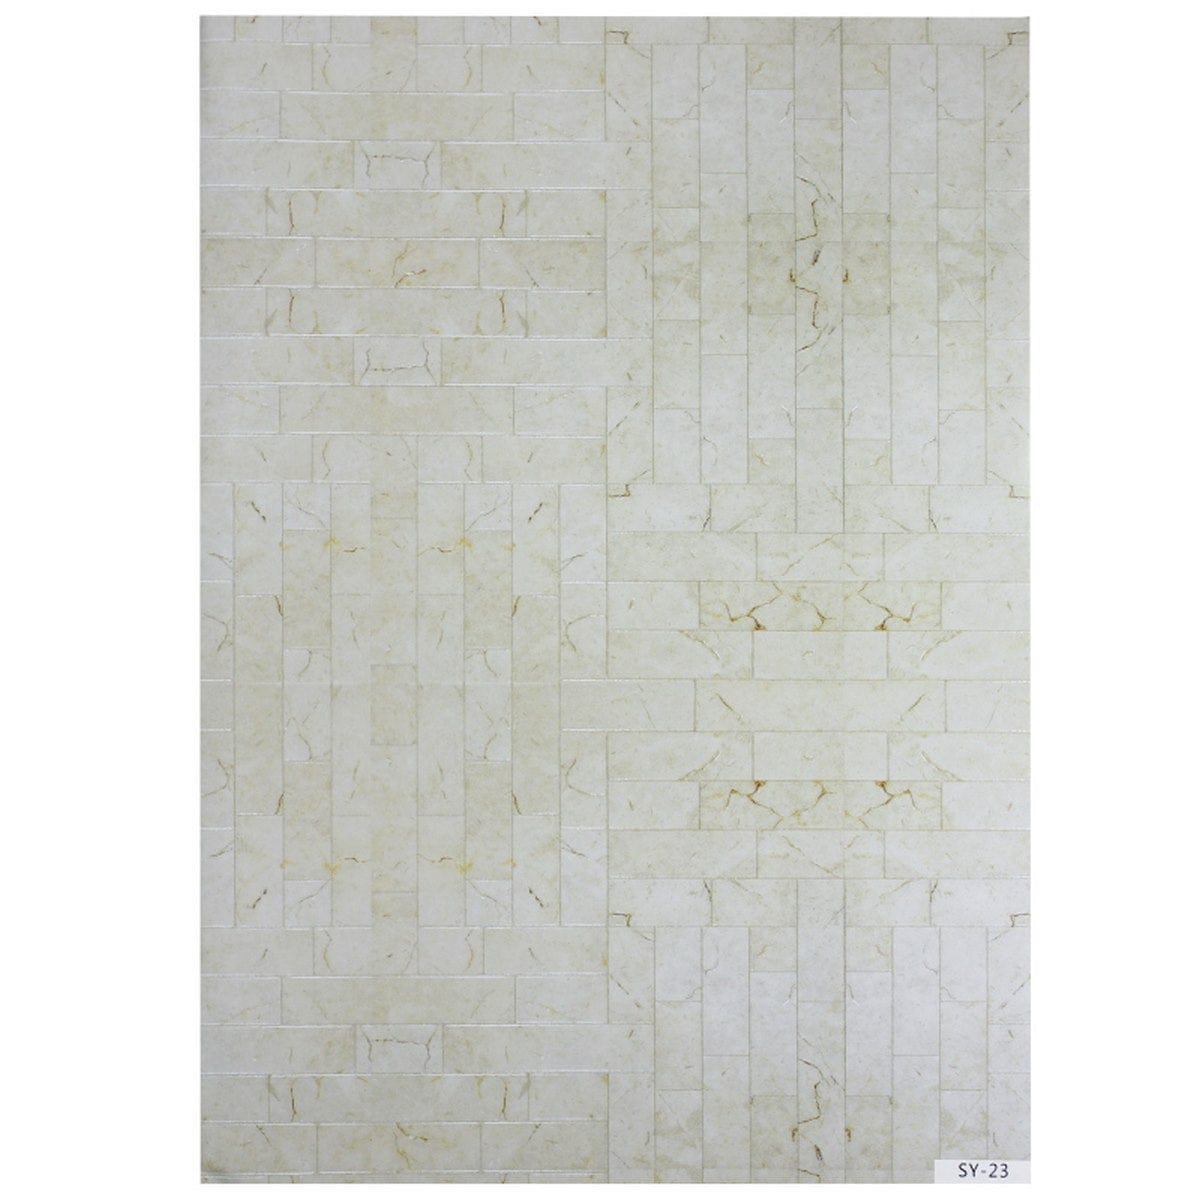 jags-mumbai Miniature Decorative Flooring Paper With Stk A/3 SY-23